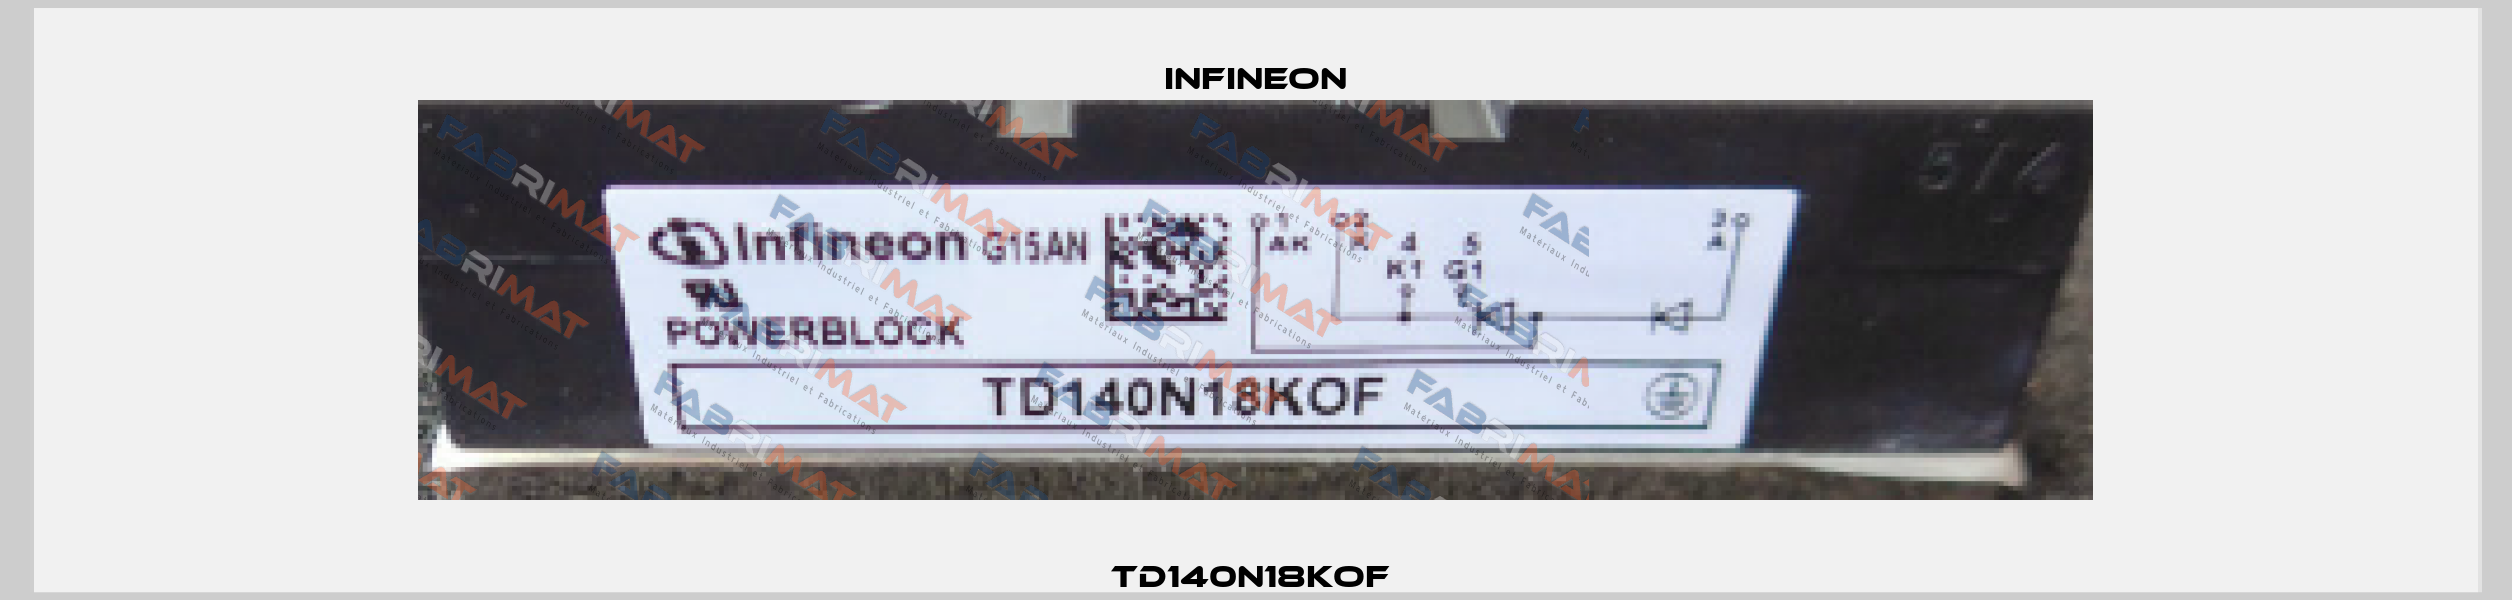 TD140N18KOF  Infineon